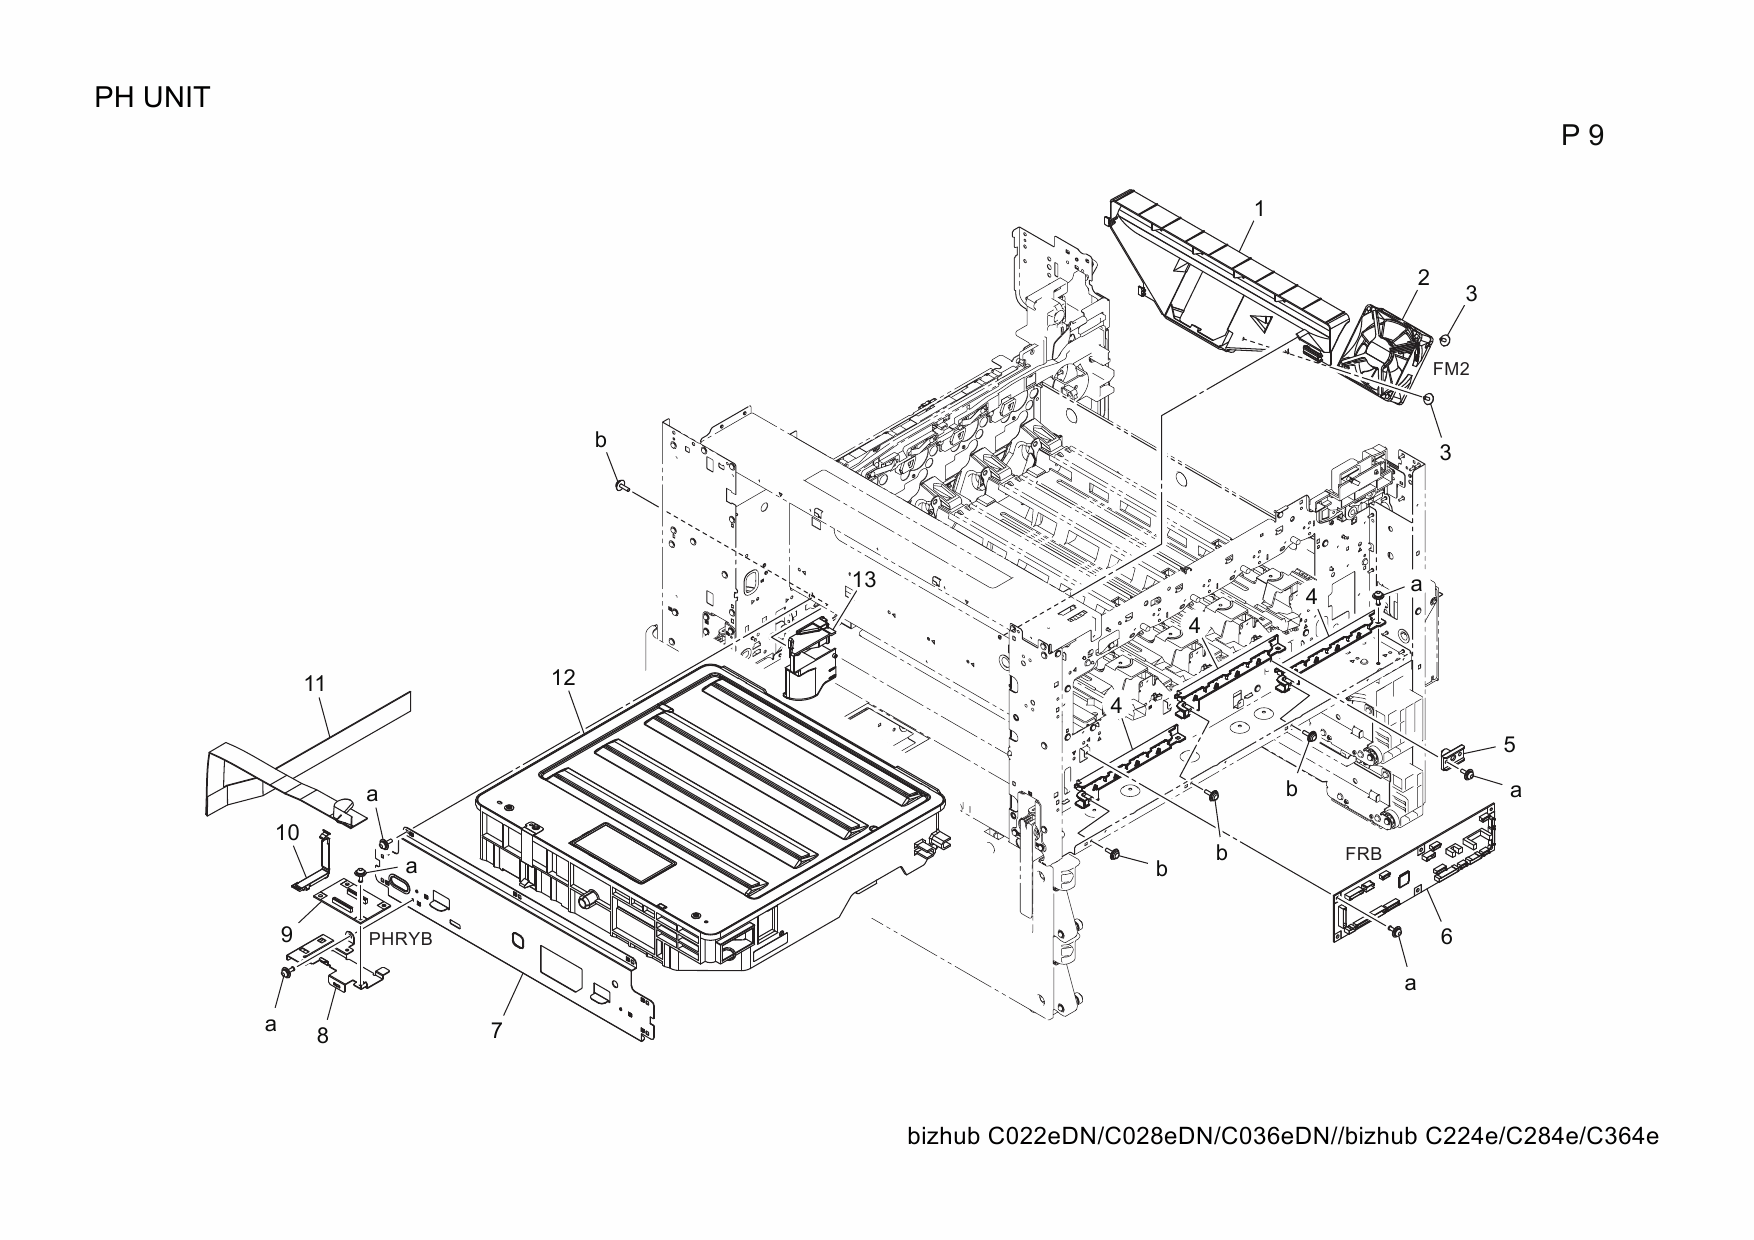 Konica-Minolta bizhub C224e C284e C364e Parts Manual-4